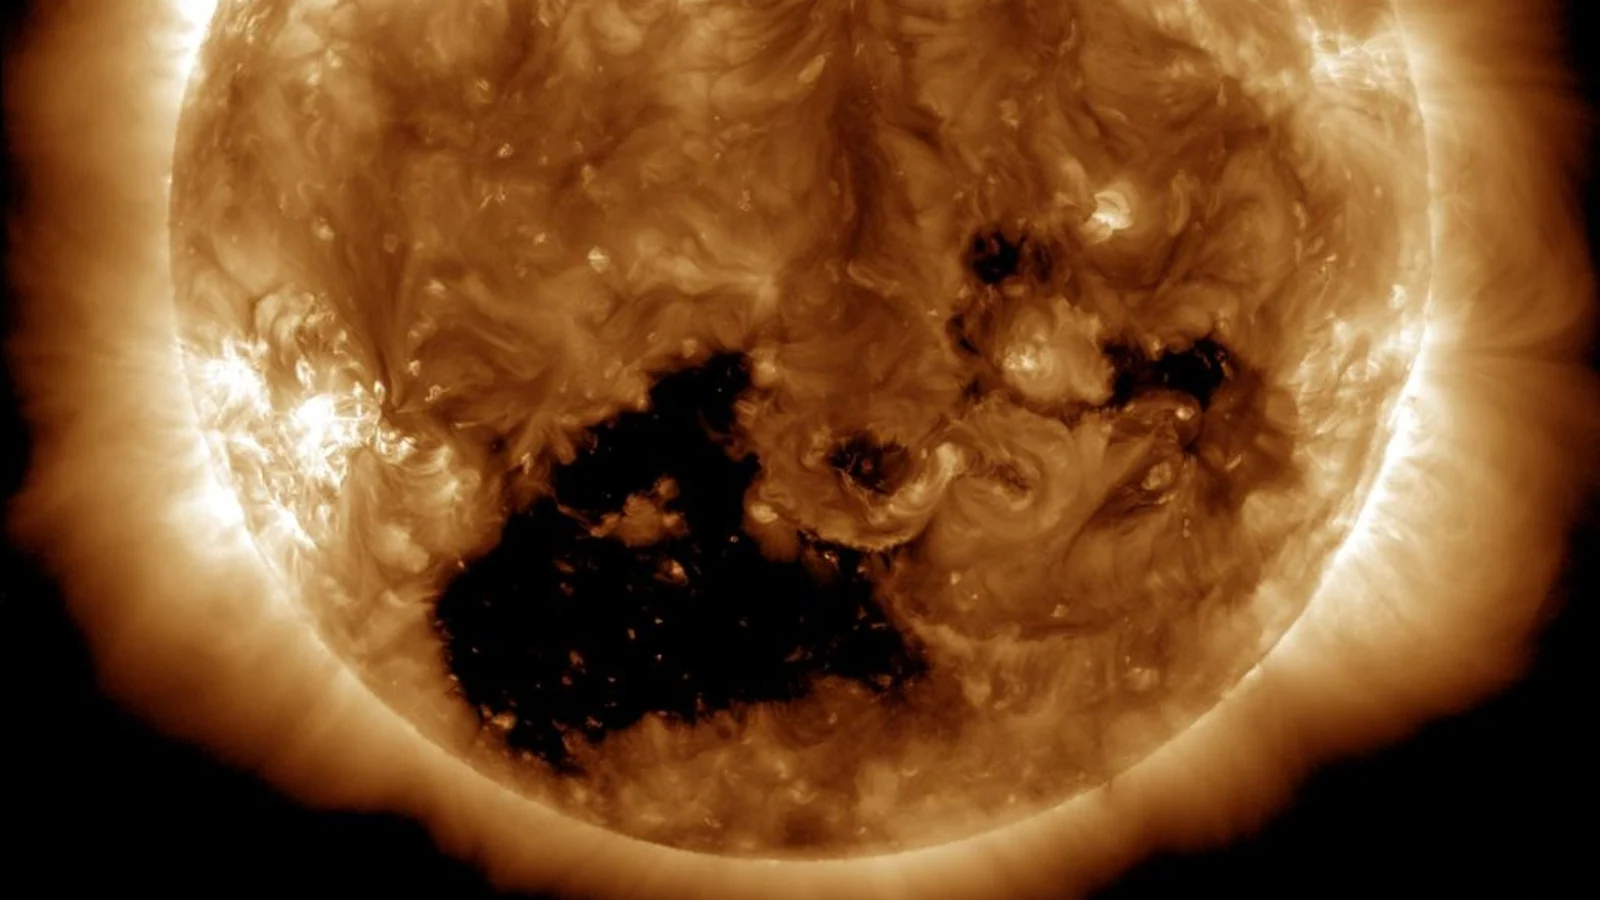 Solar Storm Alert: Second Giant Hole Appears on Sun, Threatens Earth with 18 Million MPH Solar Winds